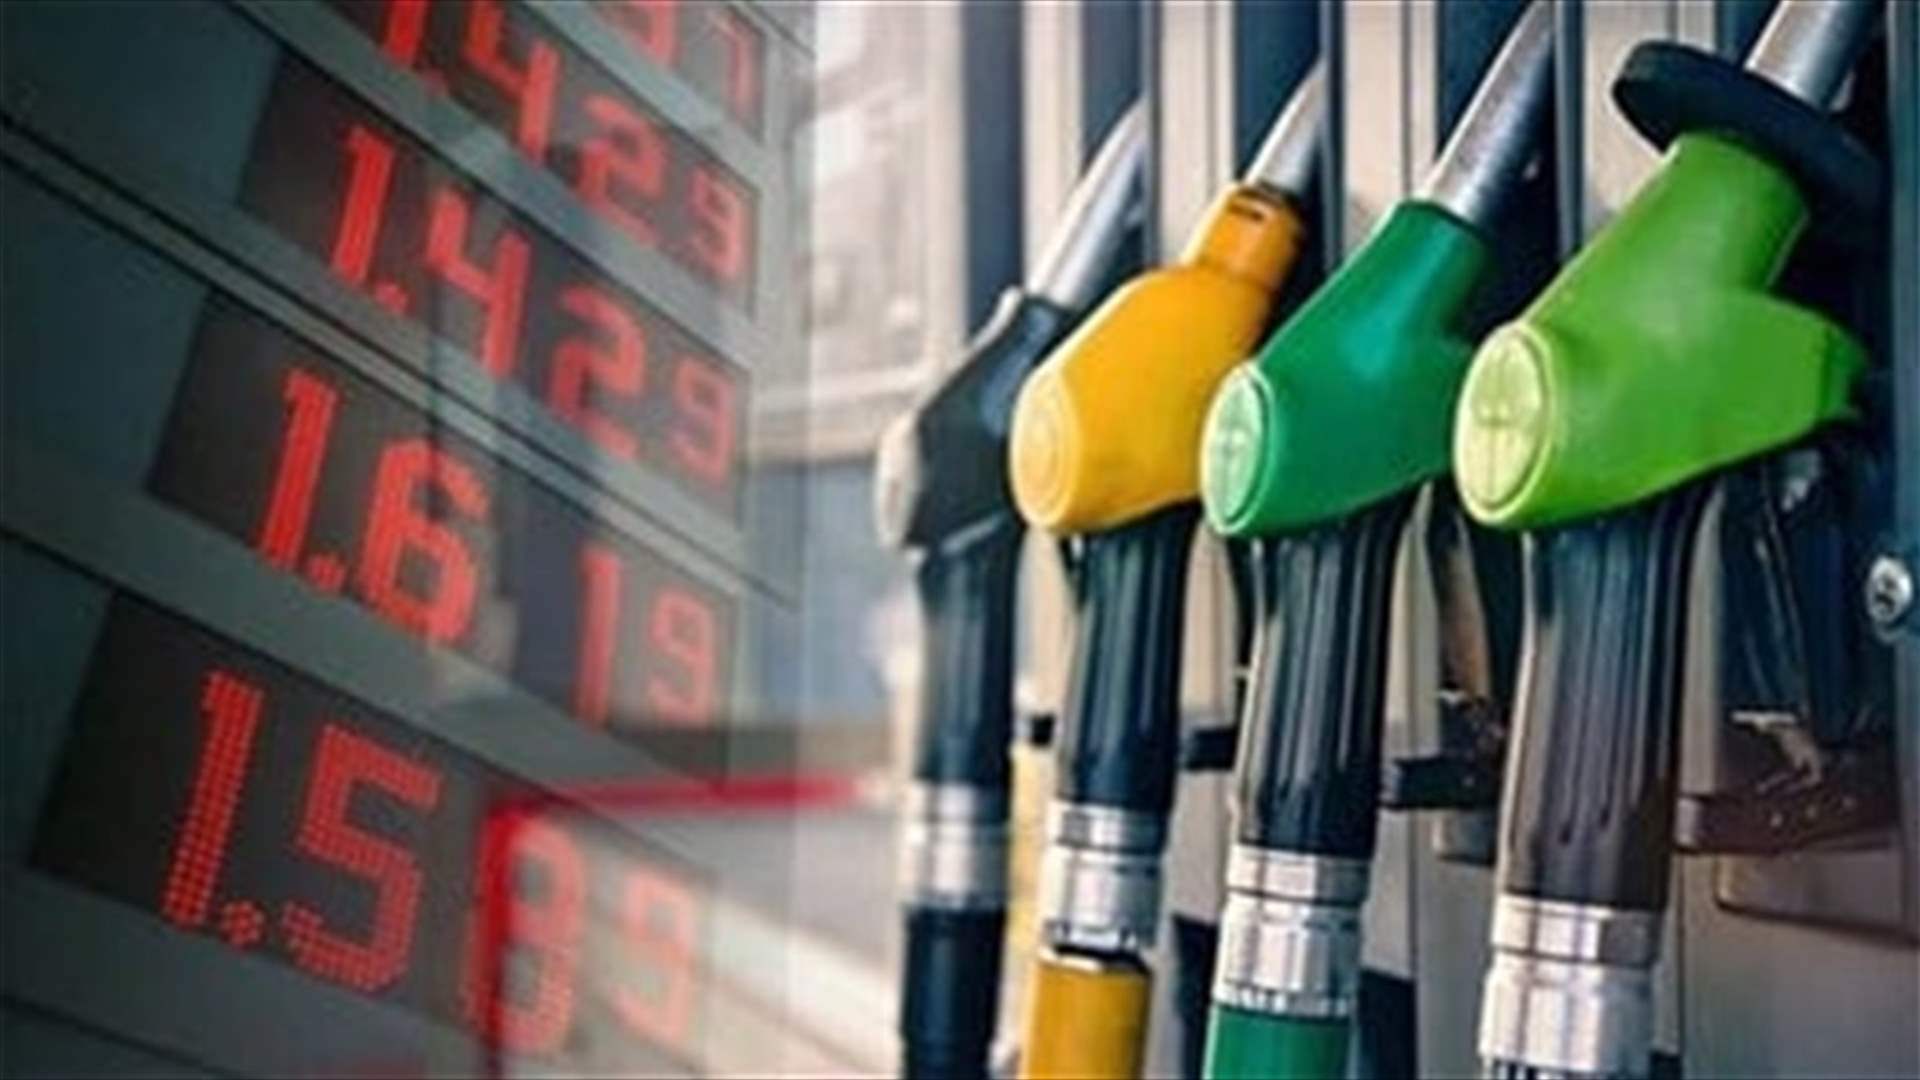 Drop in fuel prices across Lebanon